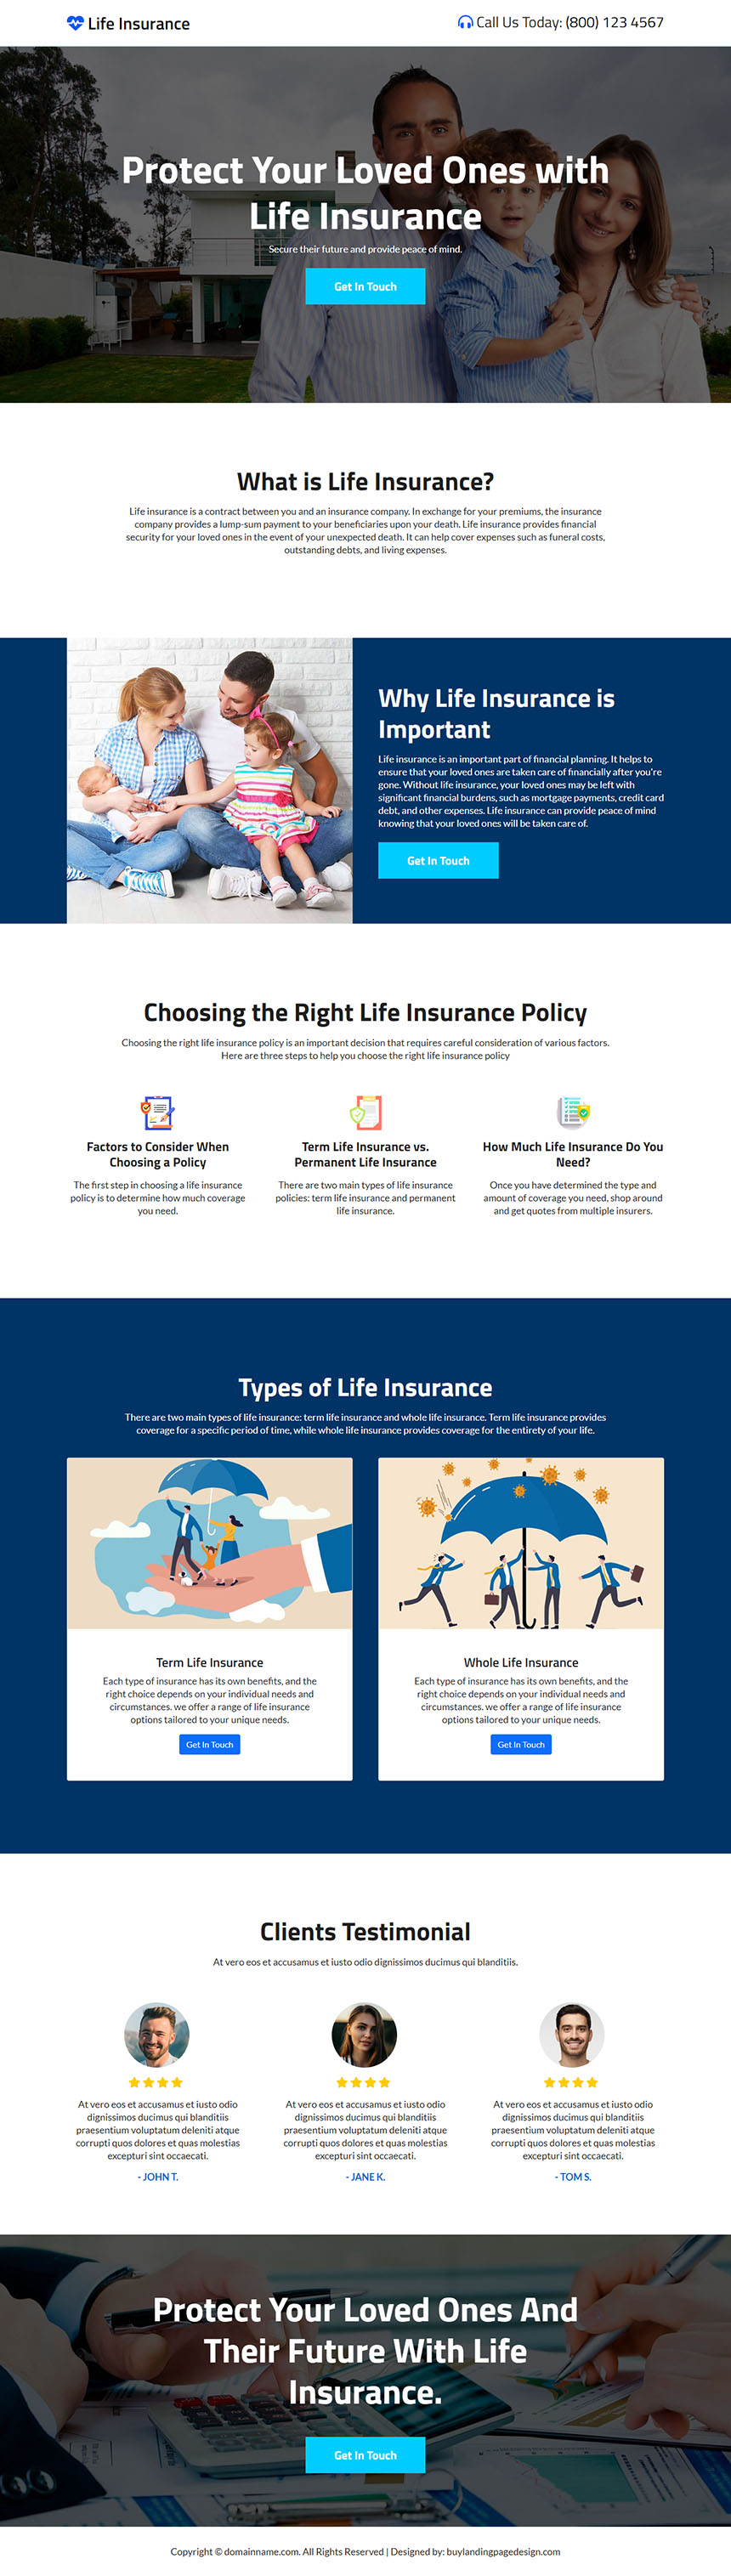 life insurance service company lead capture landing page